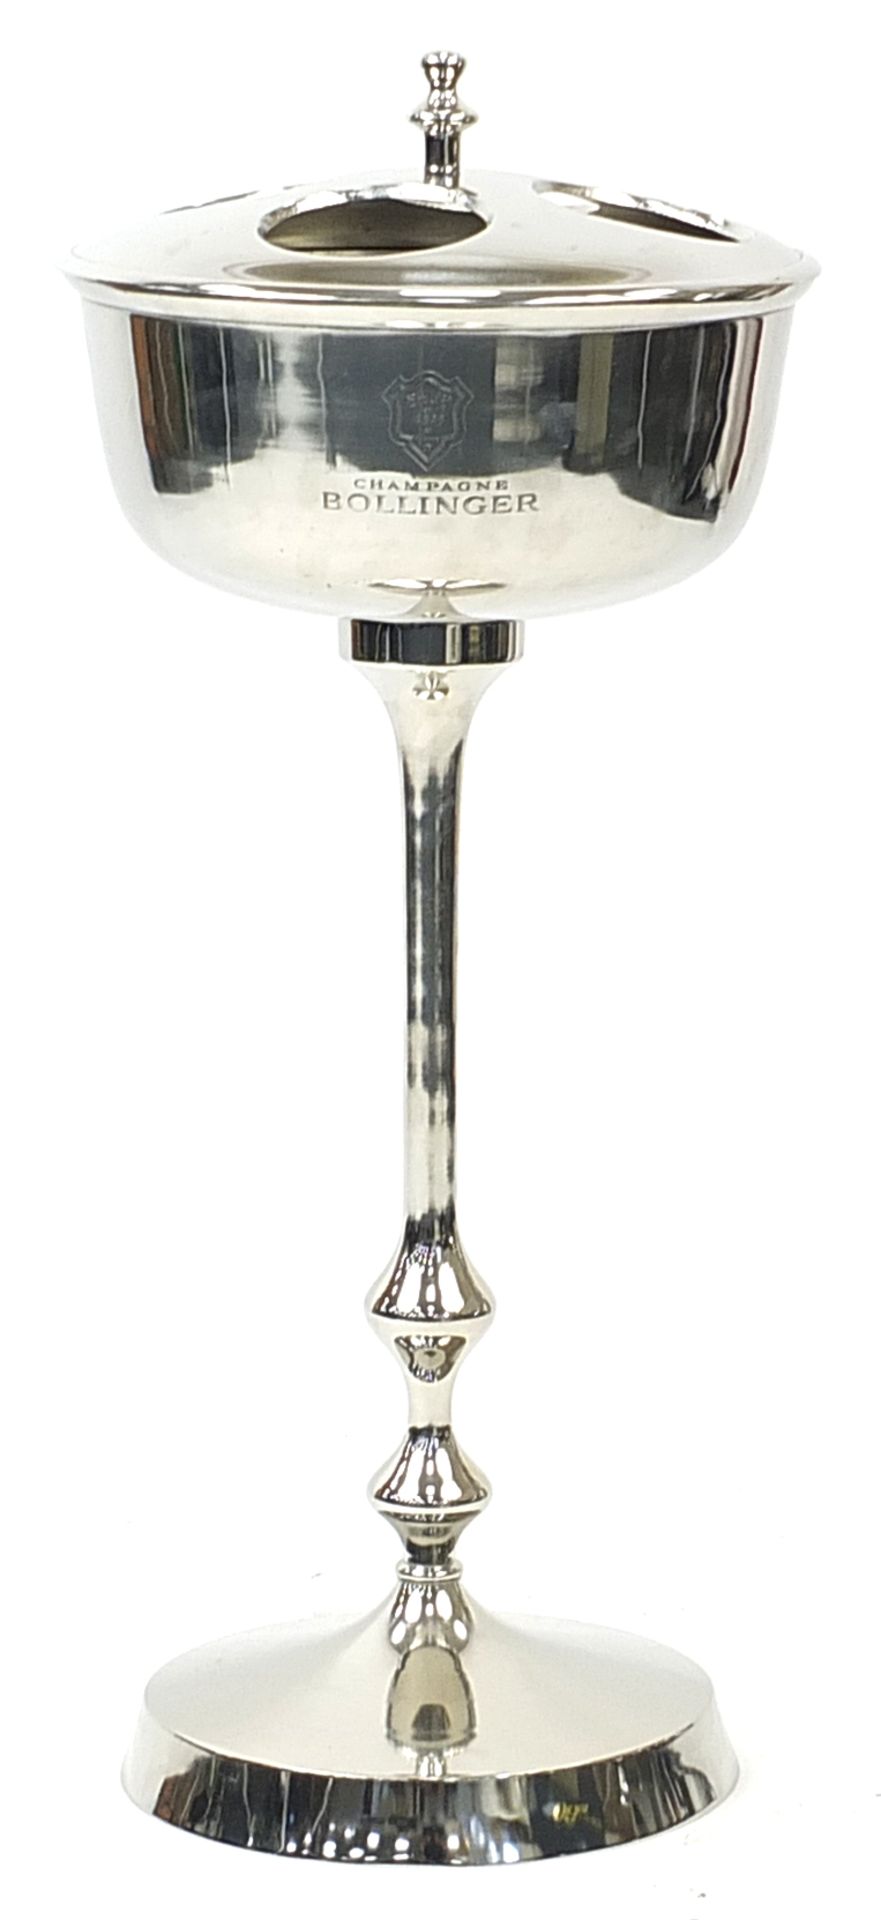 Bollinger Champagne floor standing four bottle ice bucket, 83cm high - Image 3 of 3